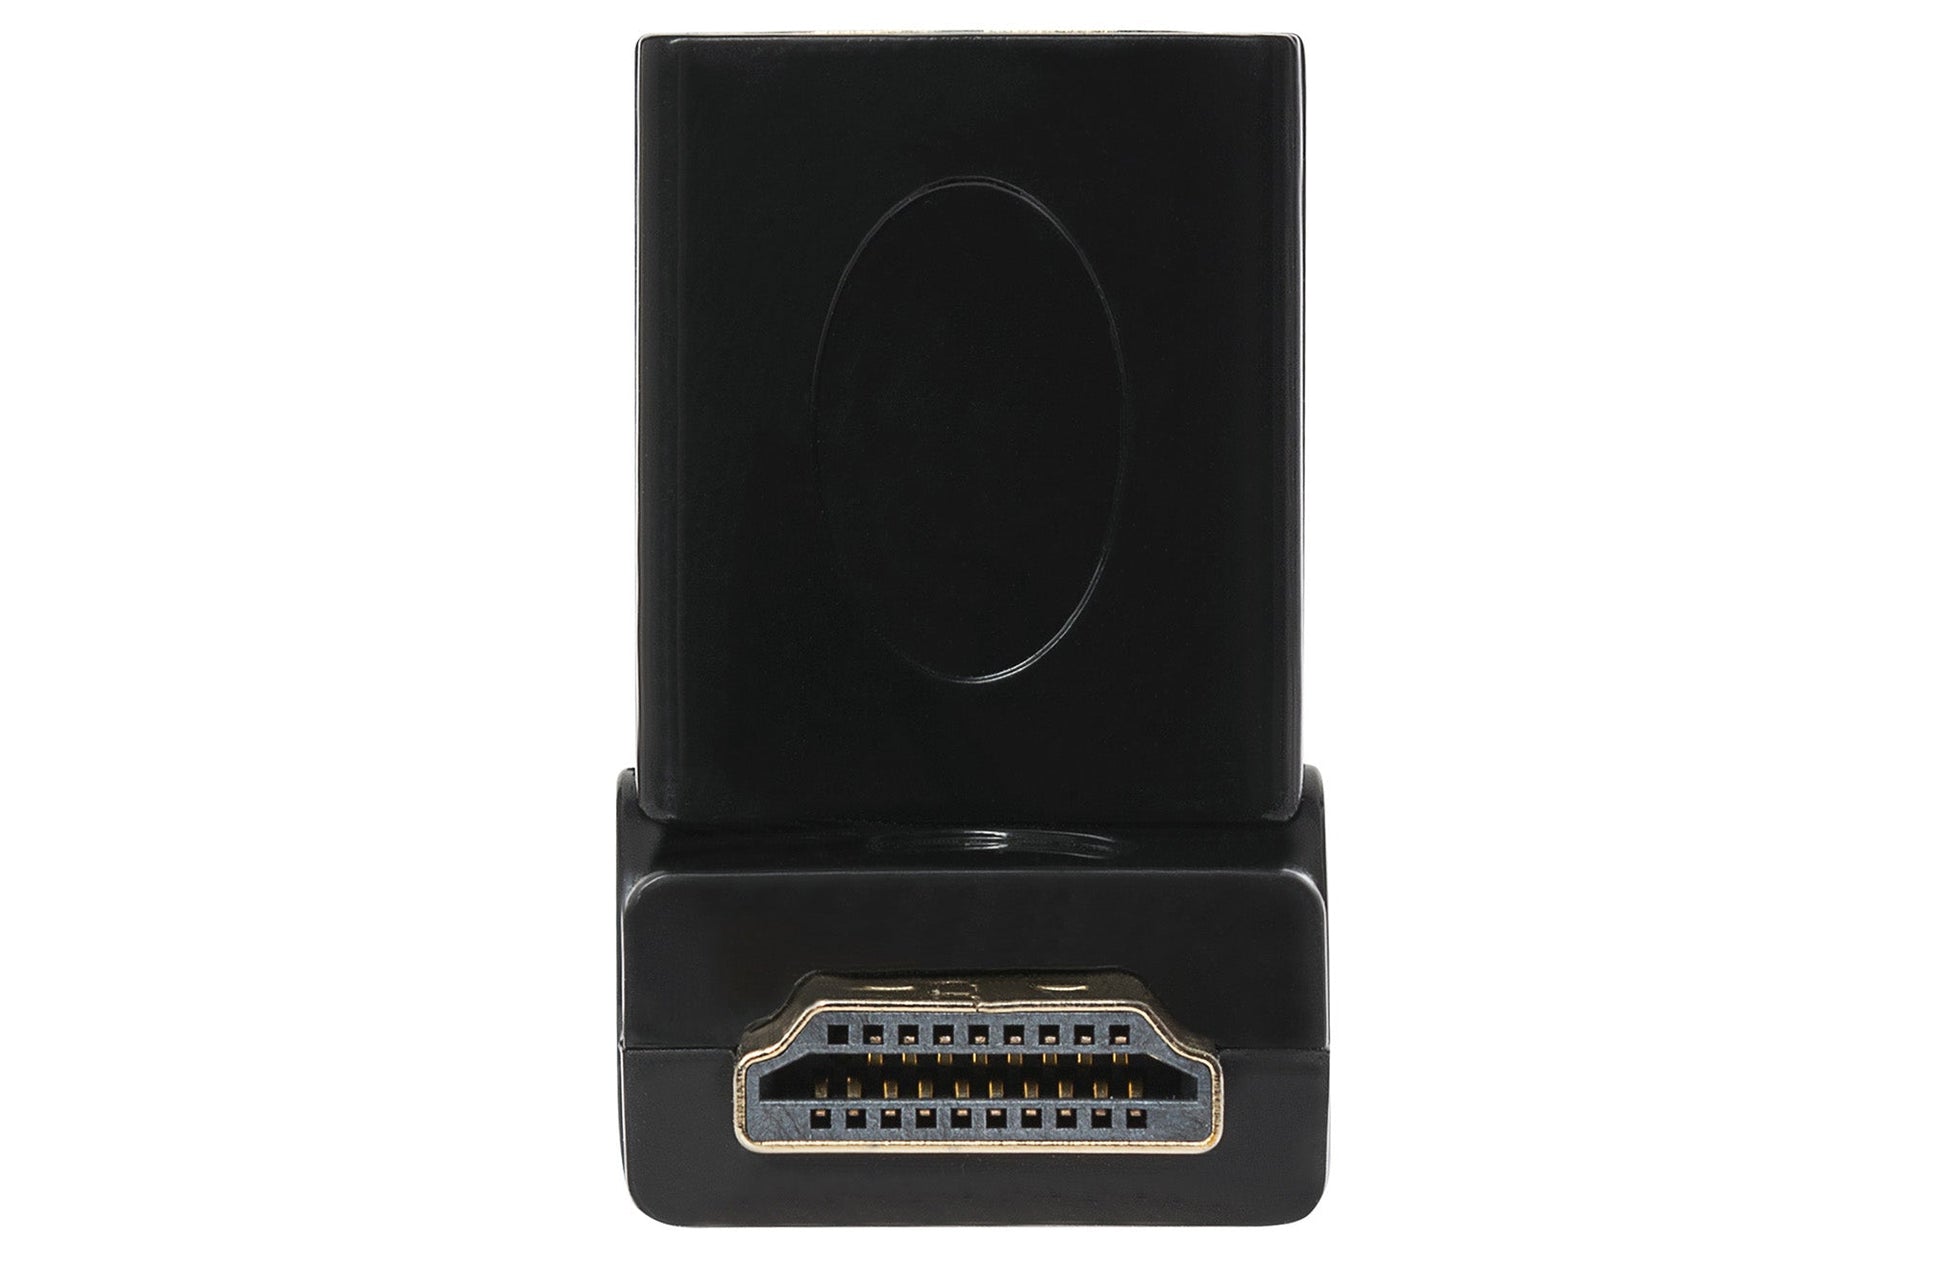 Maplin Adjustable Angle HDMI Male to HDMI Female Adapter - Black - maplin.co.uk